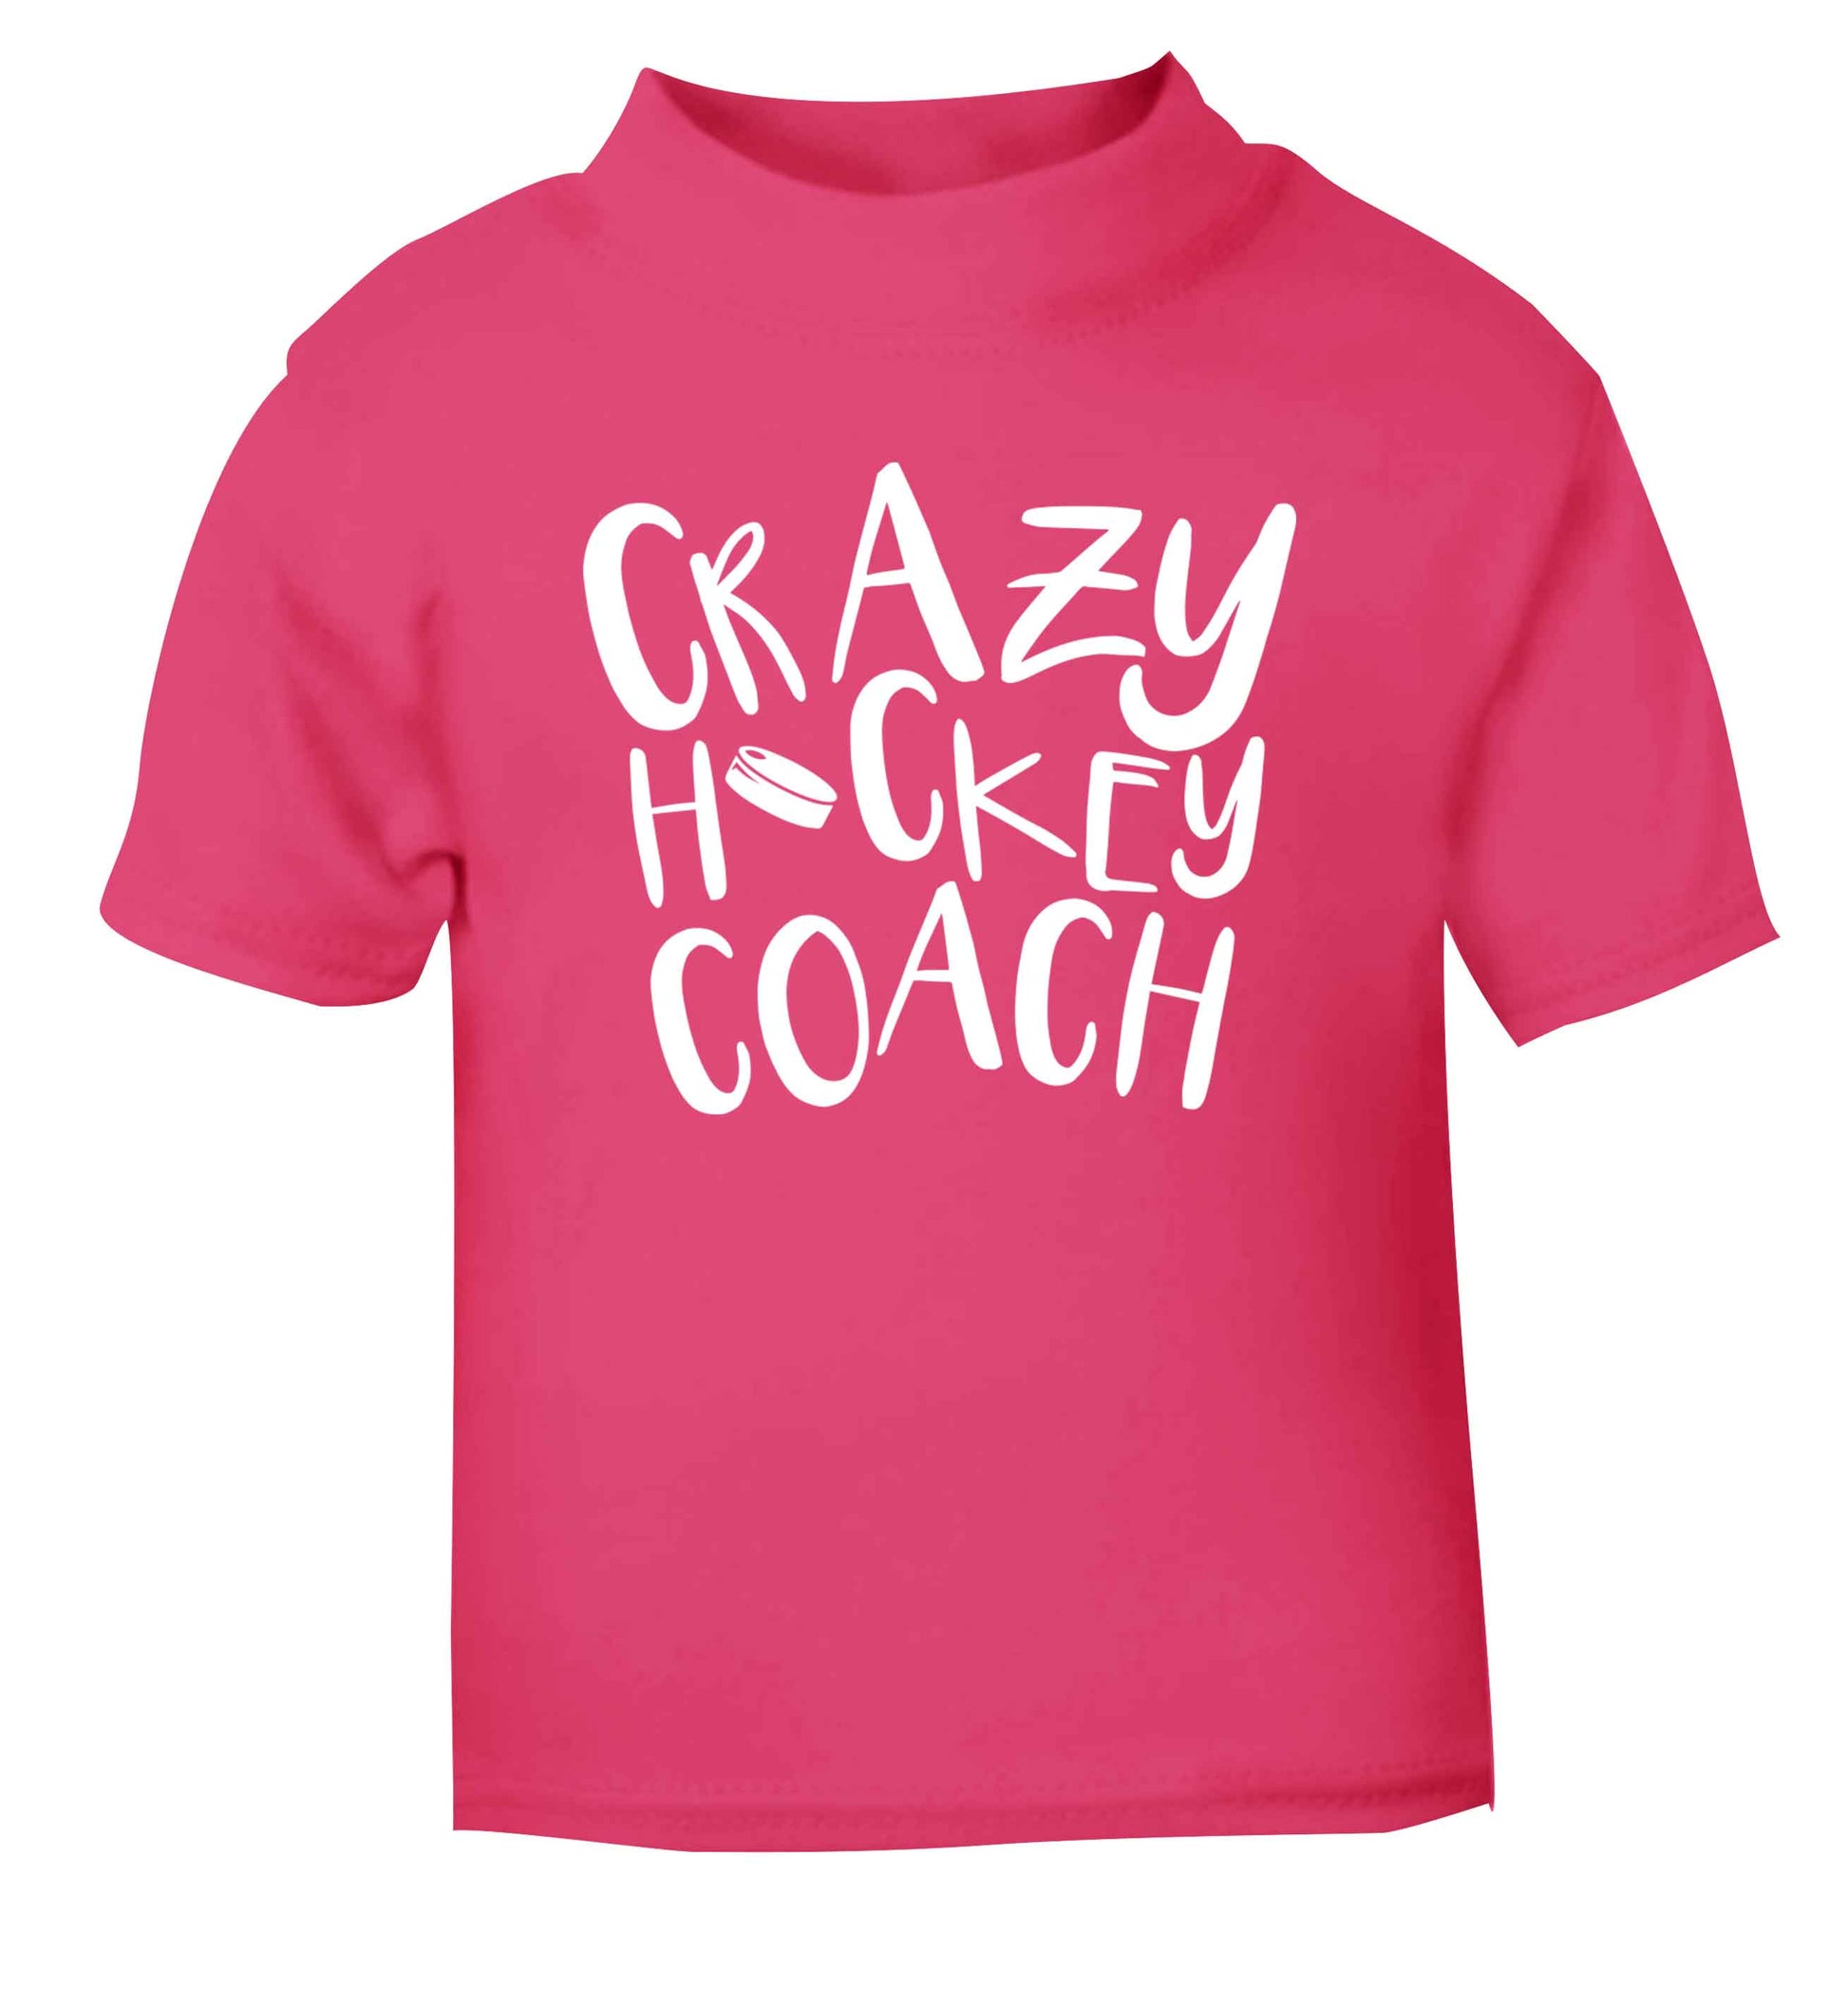 Crazy hockey coach pink Baby Toddler Tshirt 2 Years